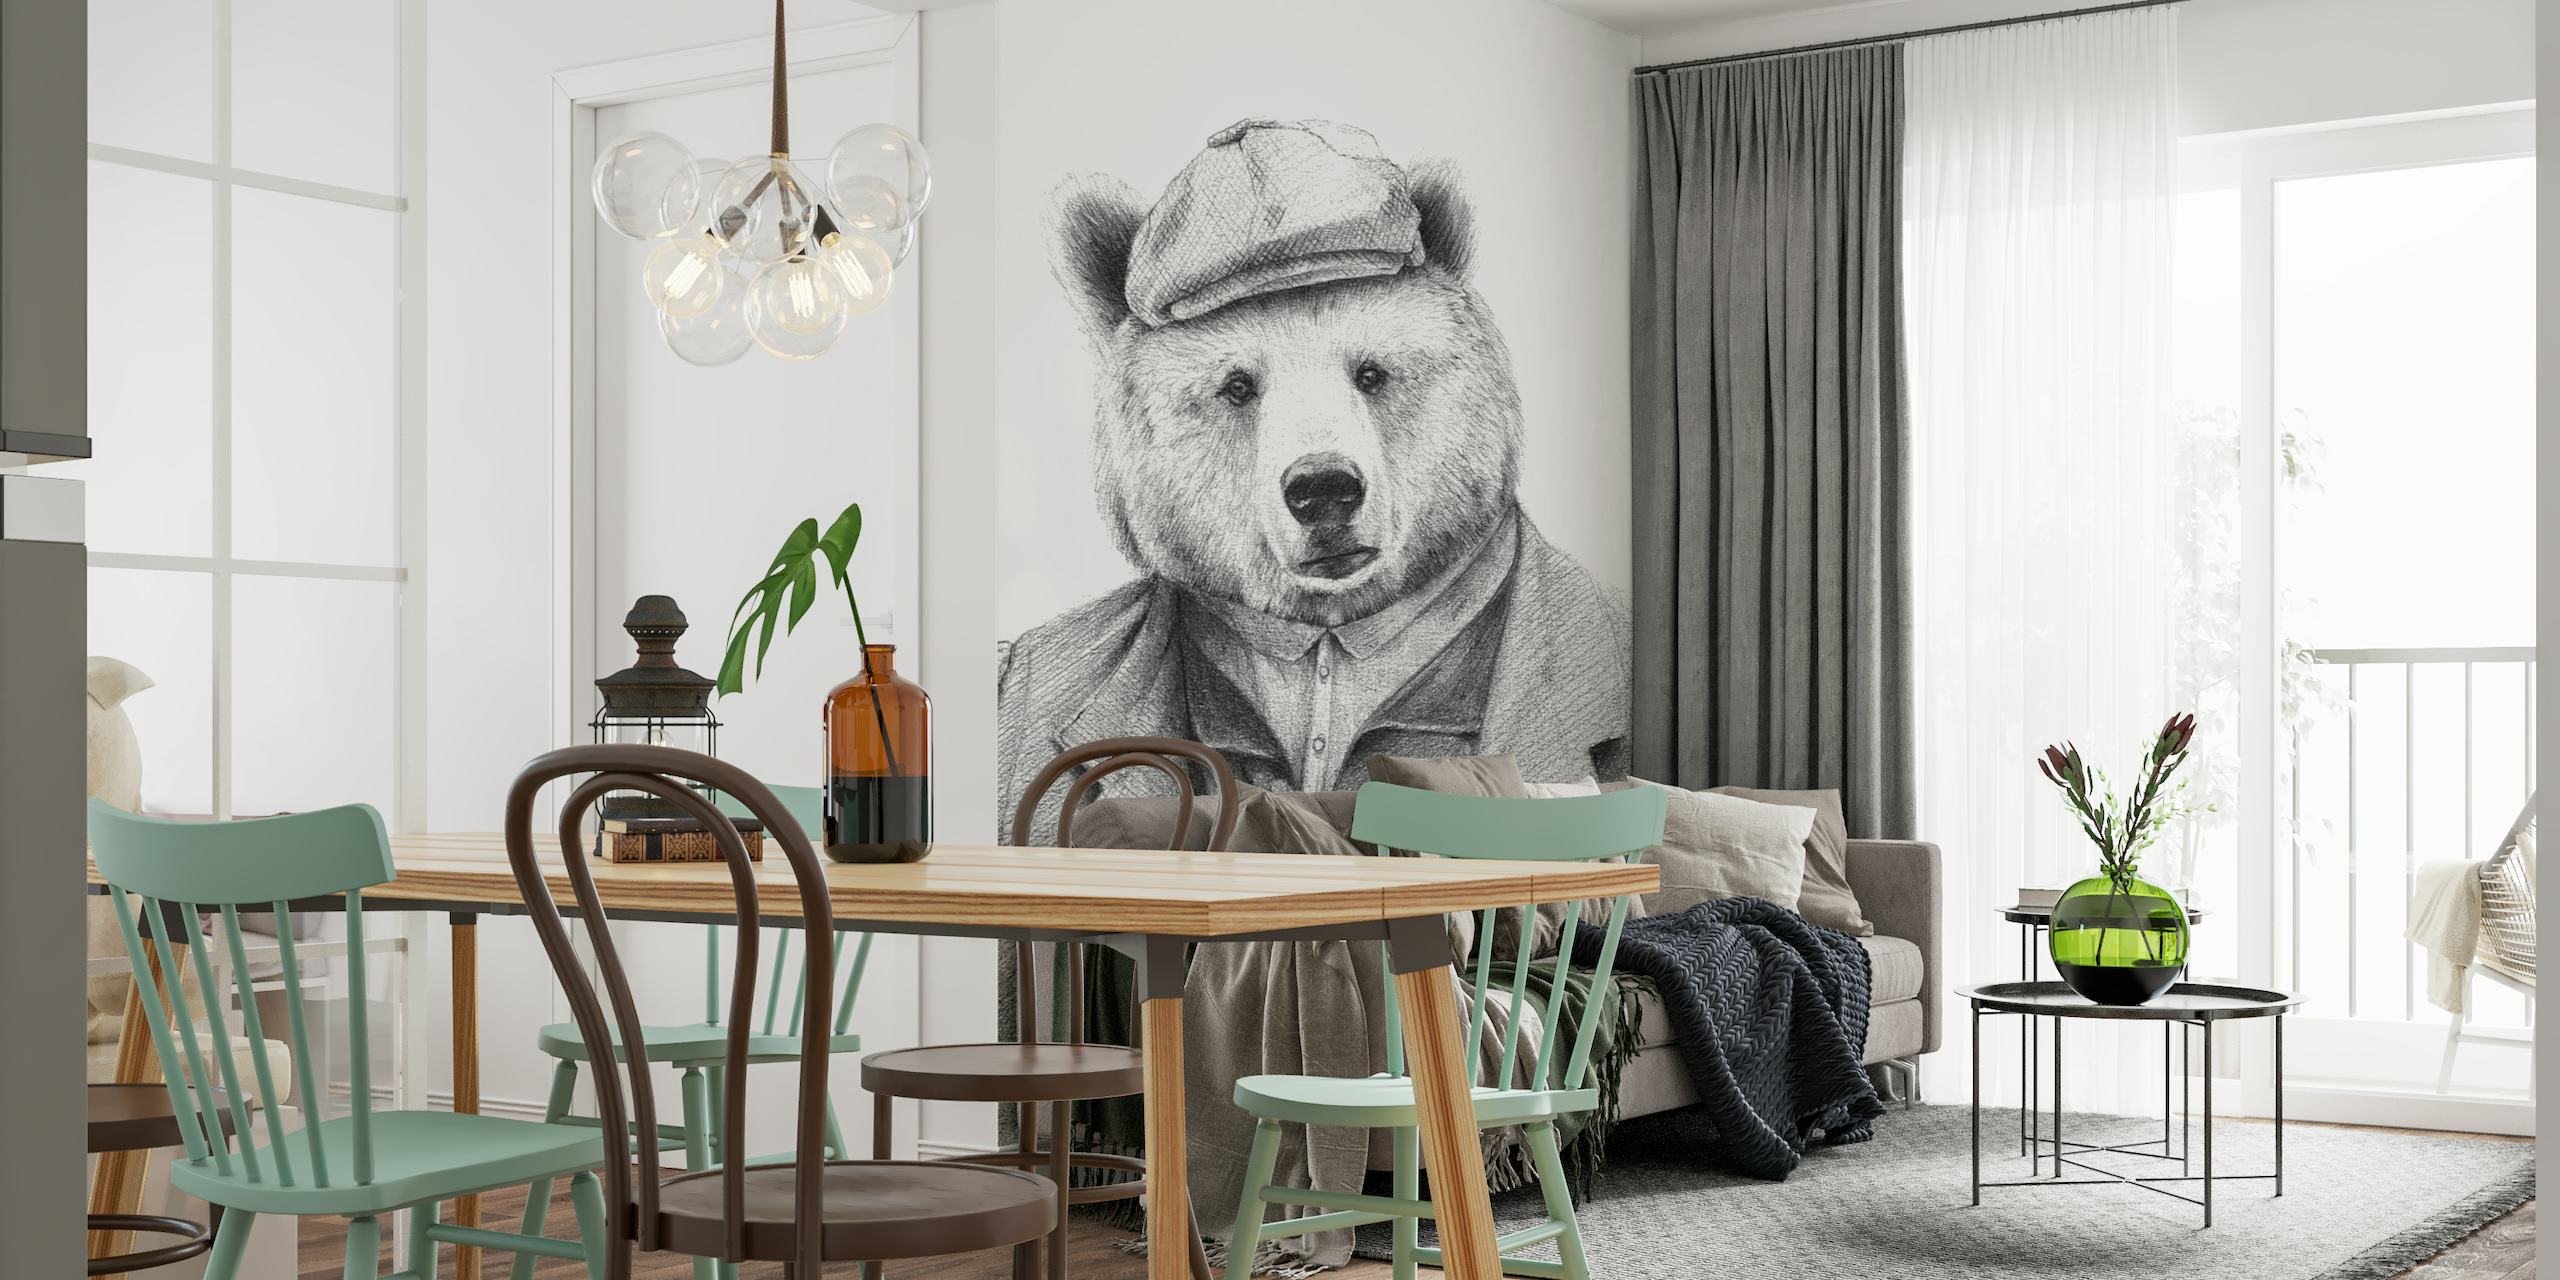 Ilustración de fotomural oso en ropa